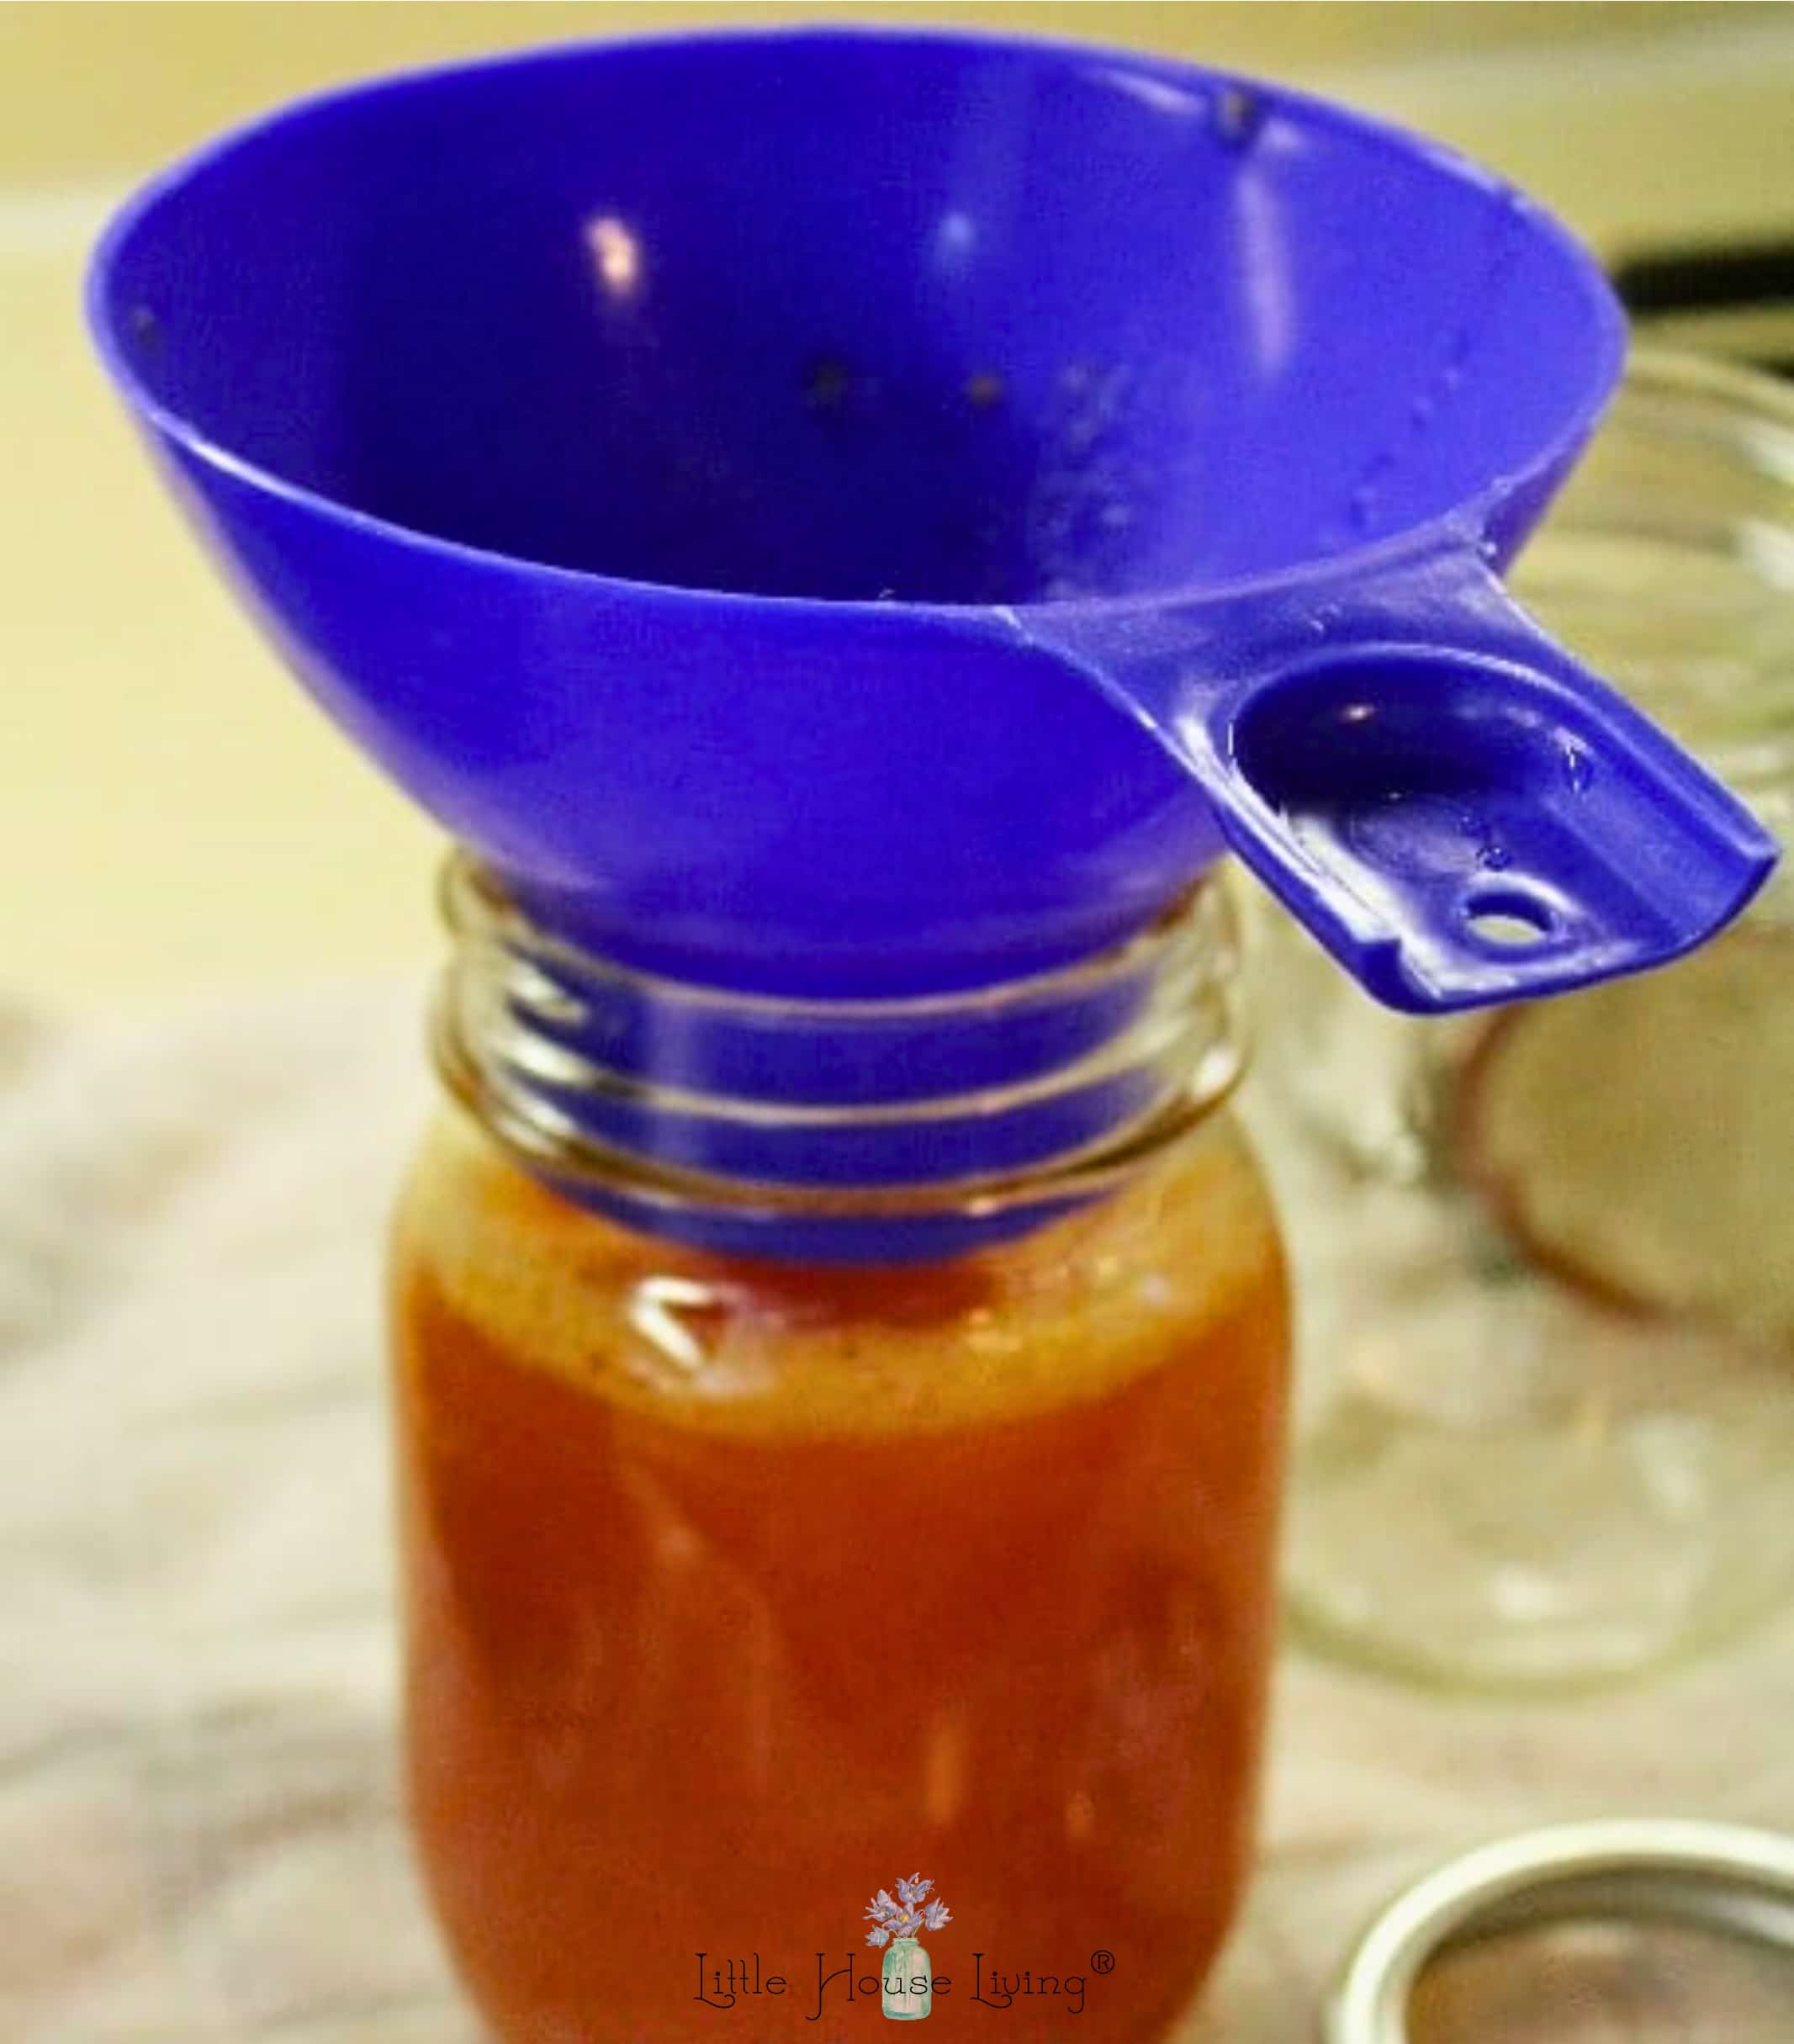 Tomato juice on a jar